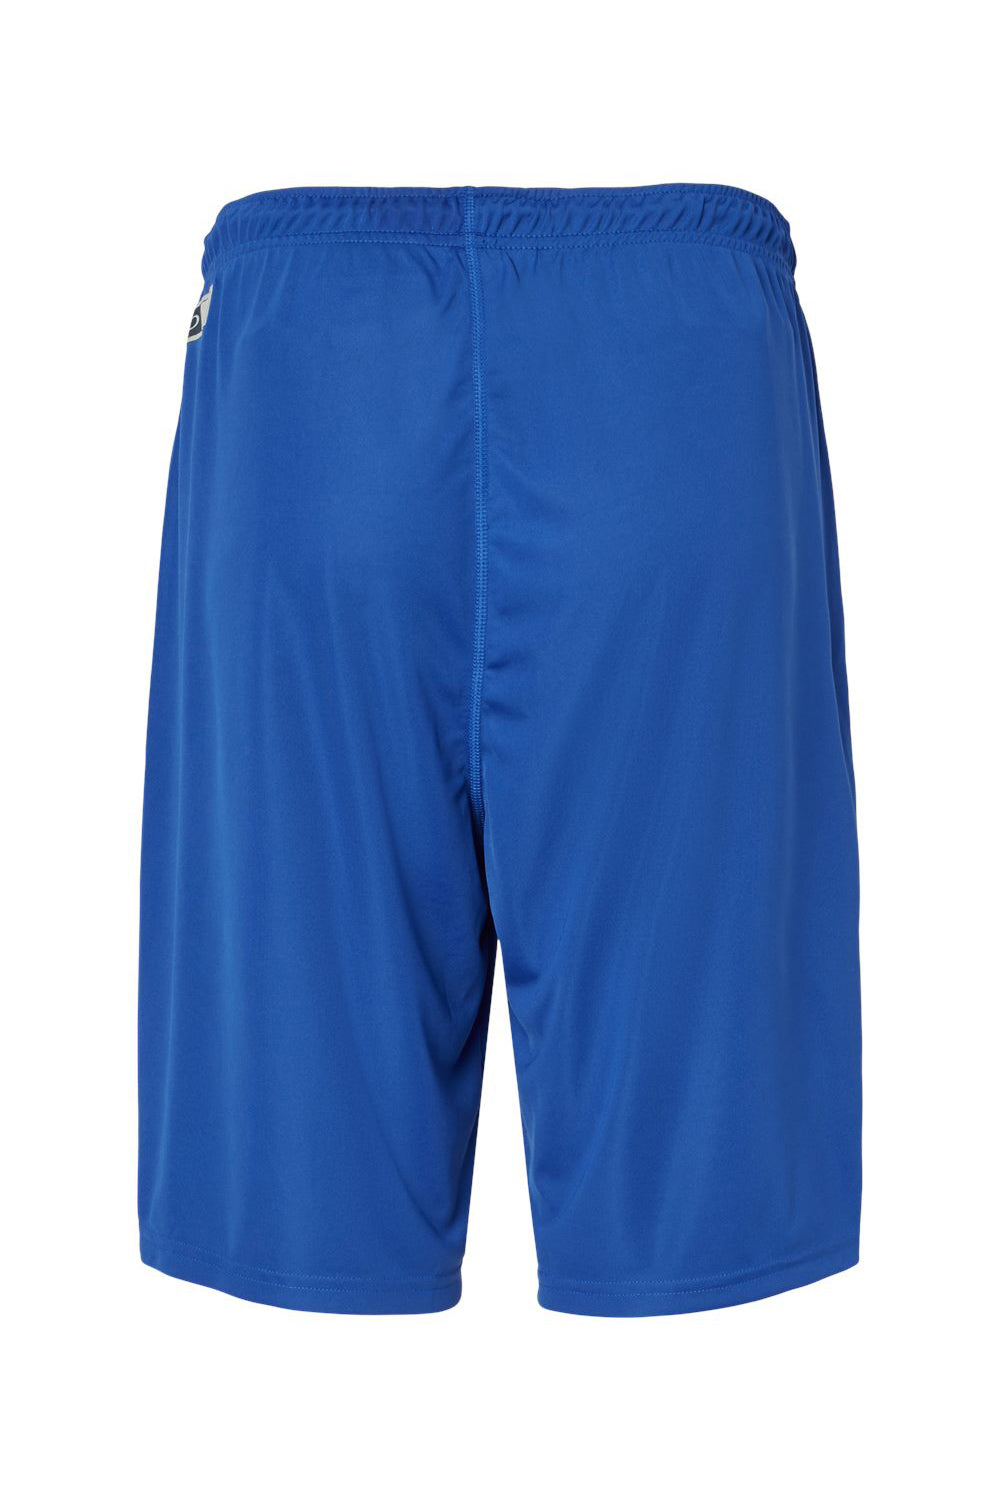 Oakley FOA402995 Mens Team Issue Hydrolix Shorts w/ Pockets Team Royal Blue Flat Back